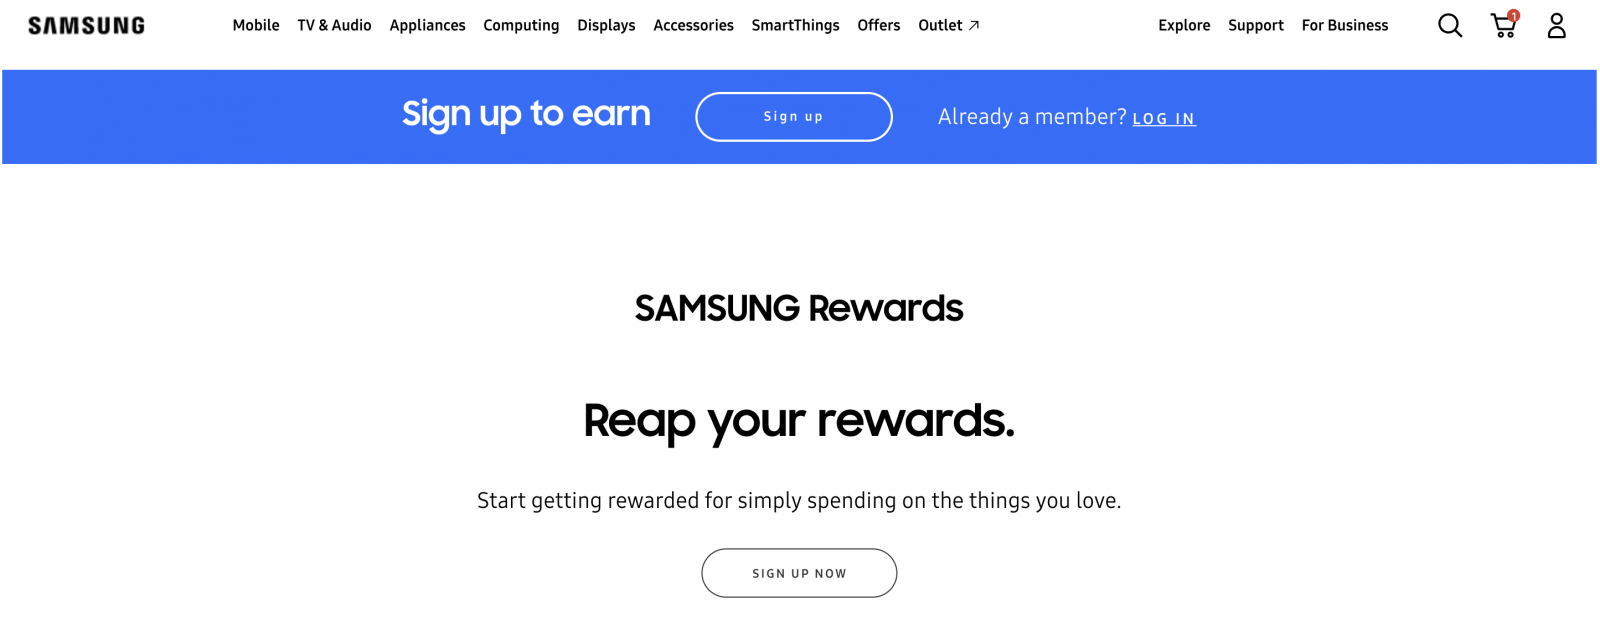 Save with the samsung rewards program